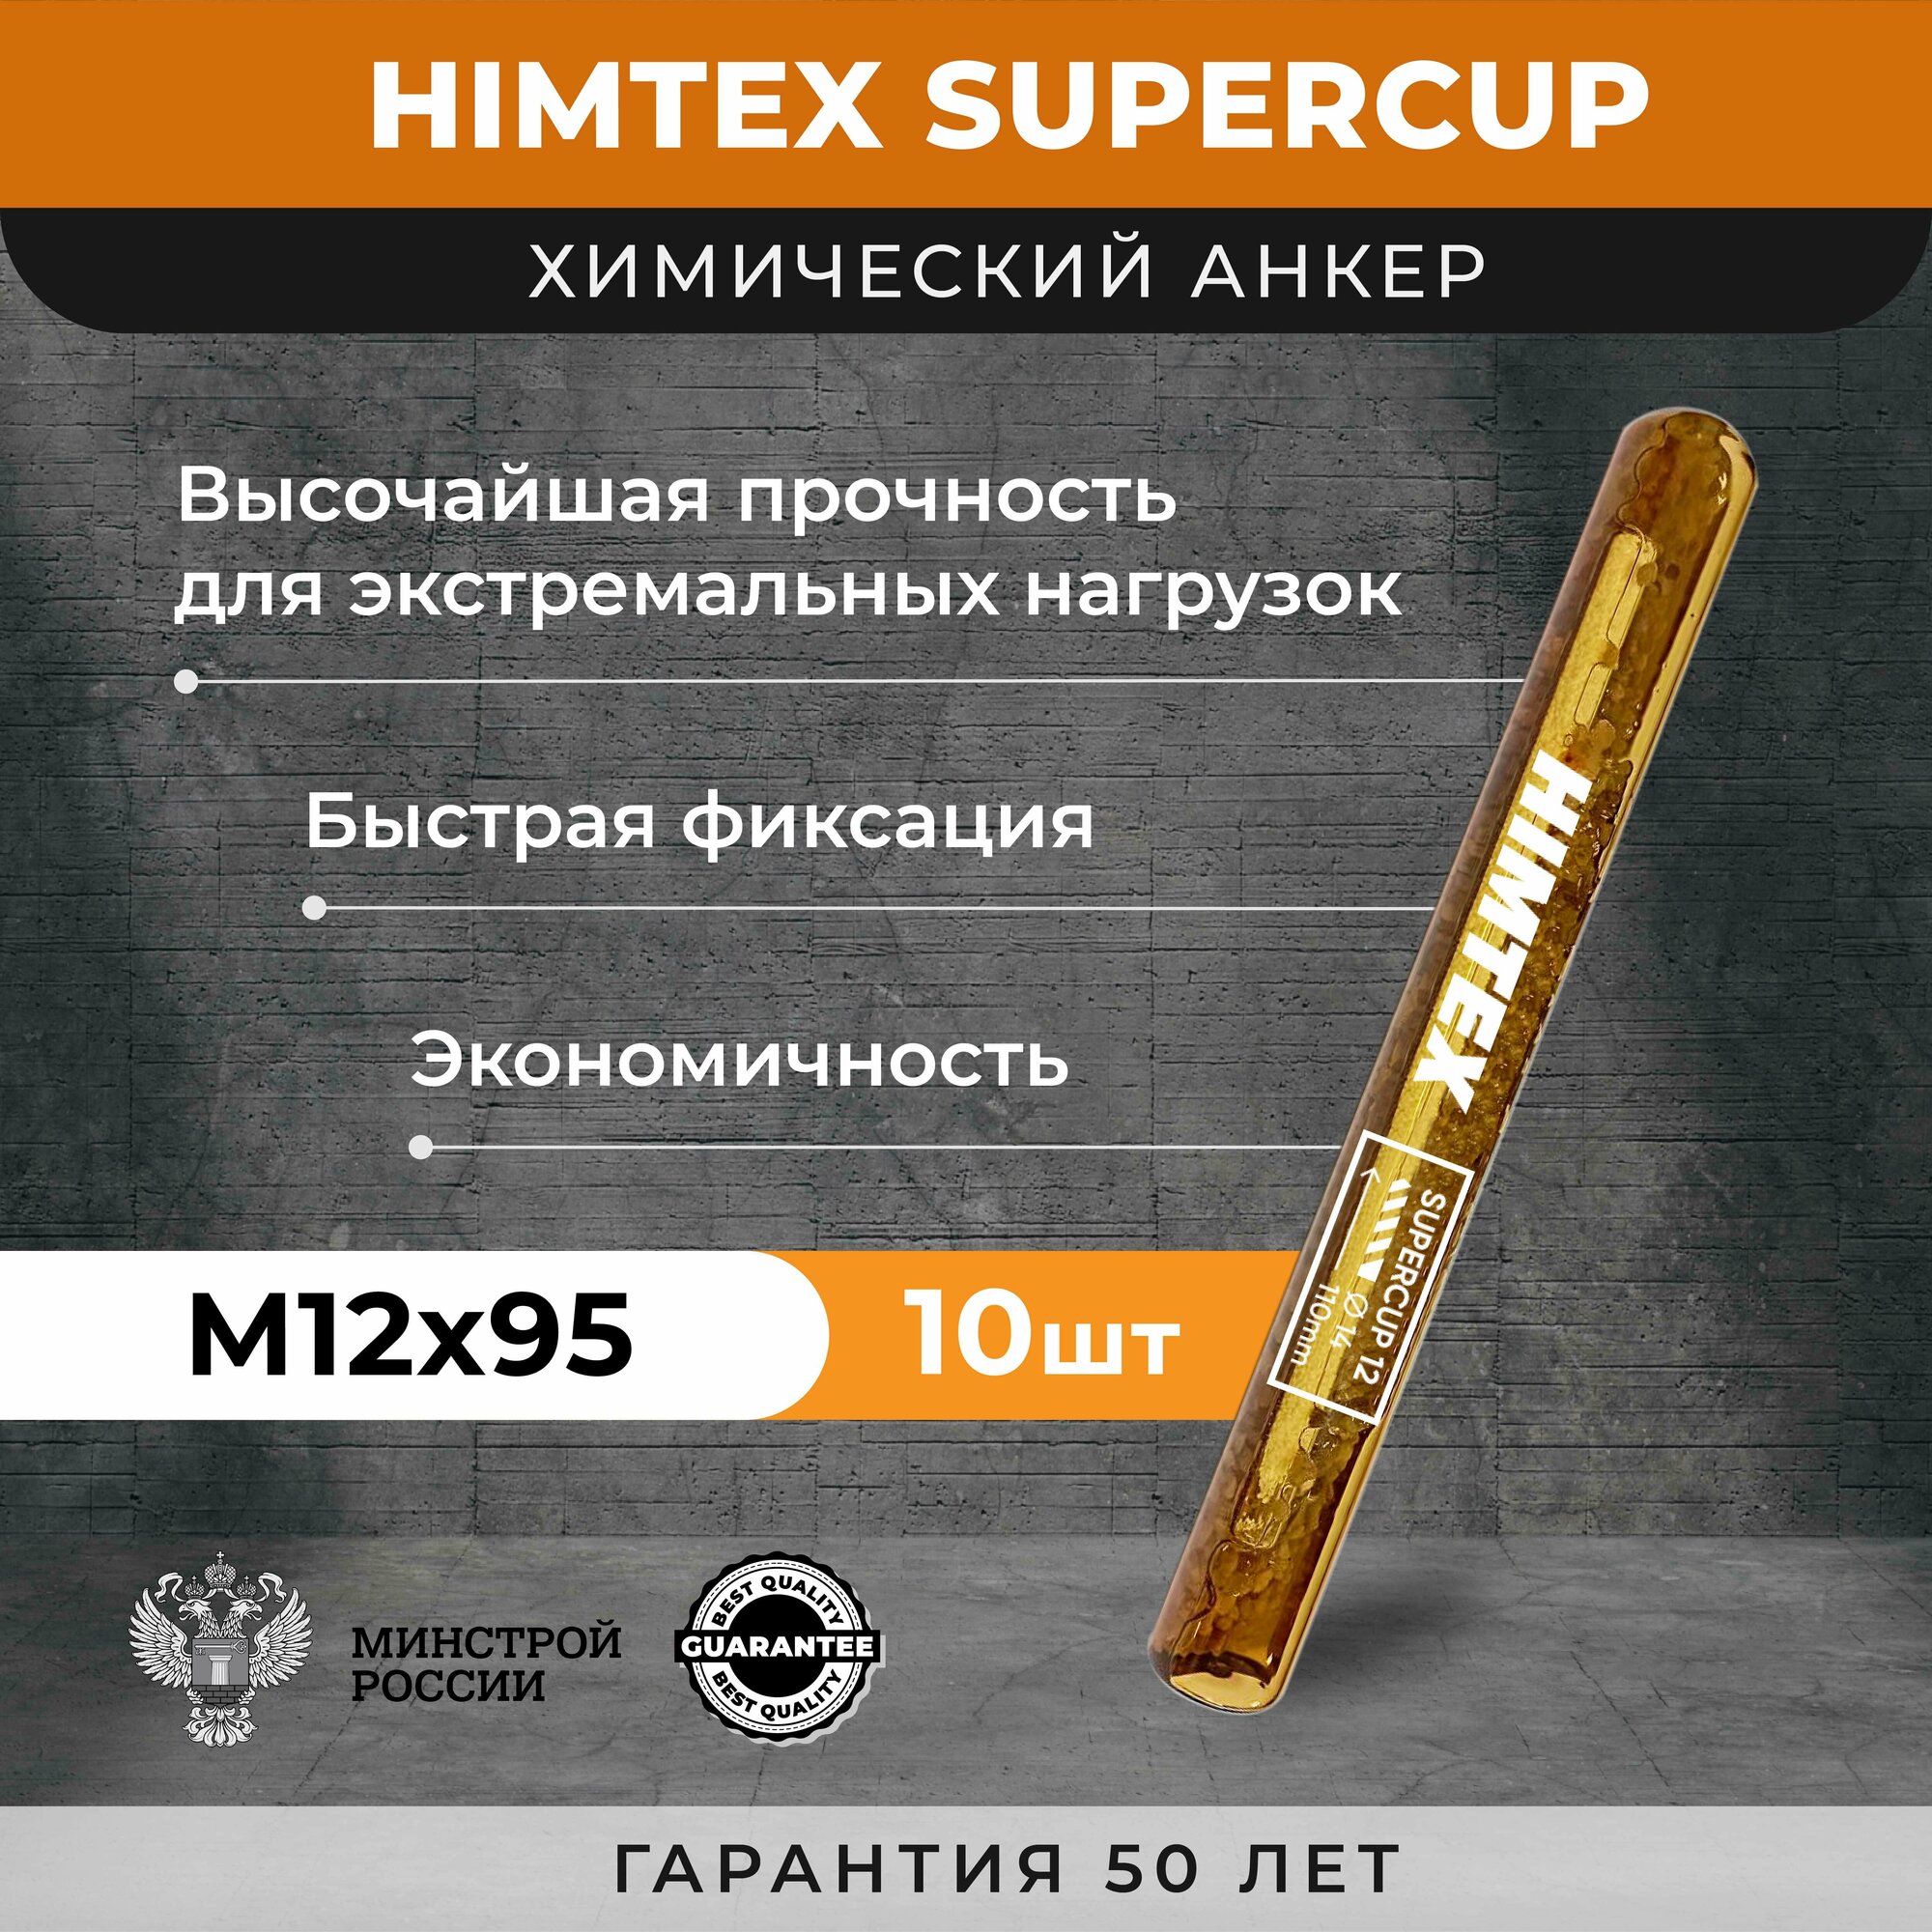 Химический анкер HIMTEX SUPERCUP 12*95